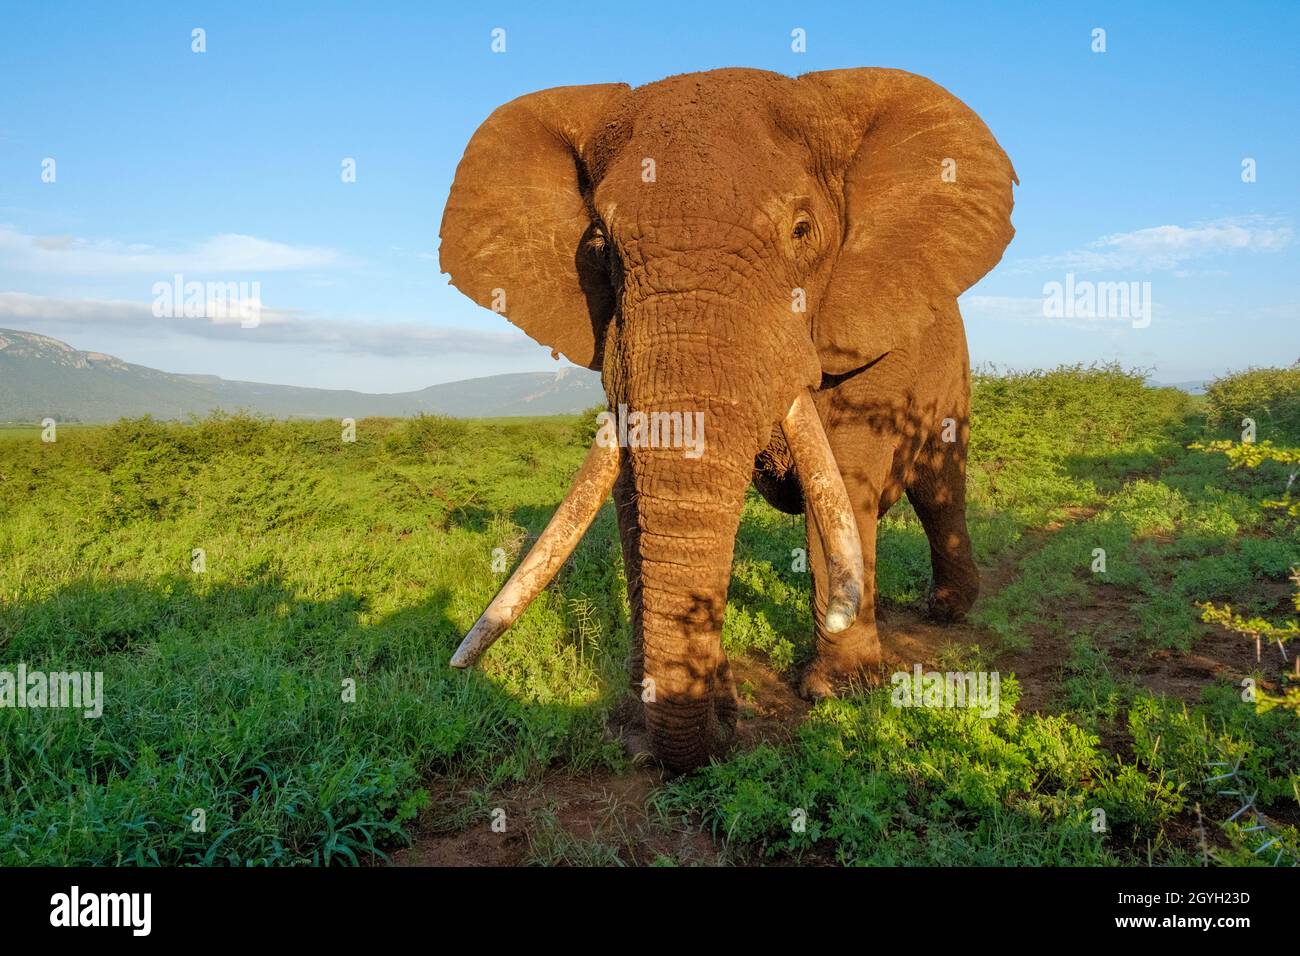 Afrikanischer Elefantenbulle (Loxodonta africana) mit seinen großen langen Stoßzähnen. Zimanga Wildreservat, Südafrika Stockfoto